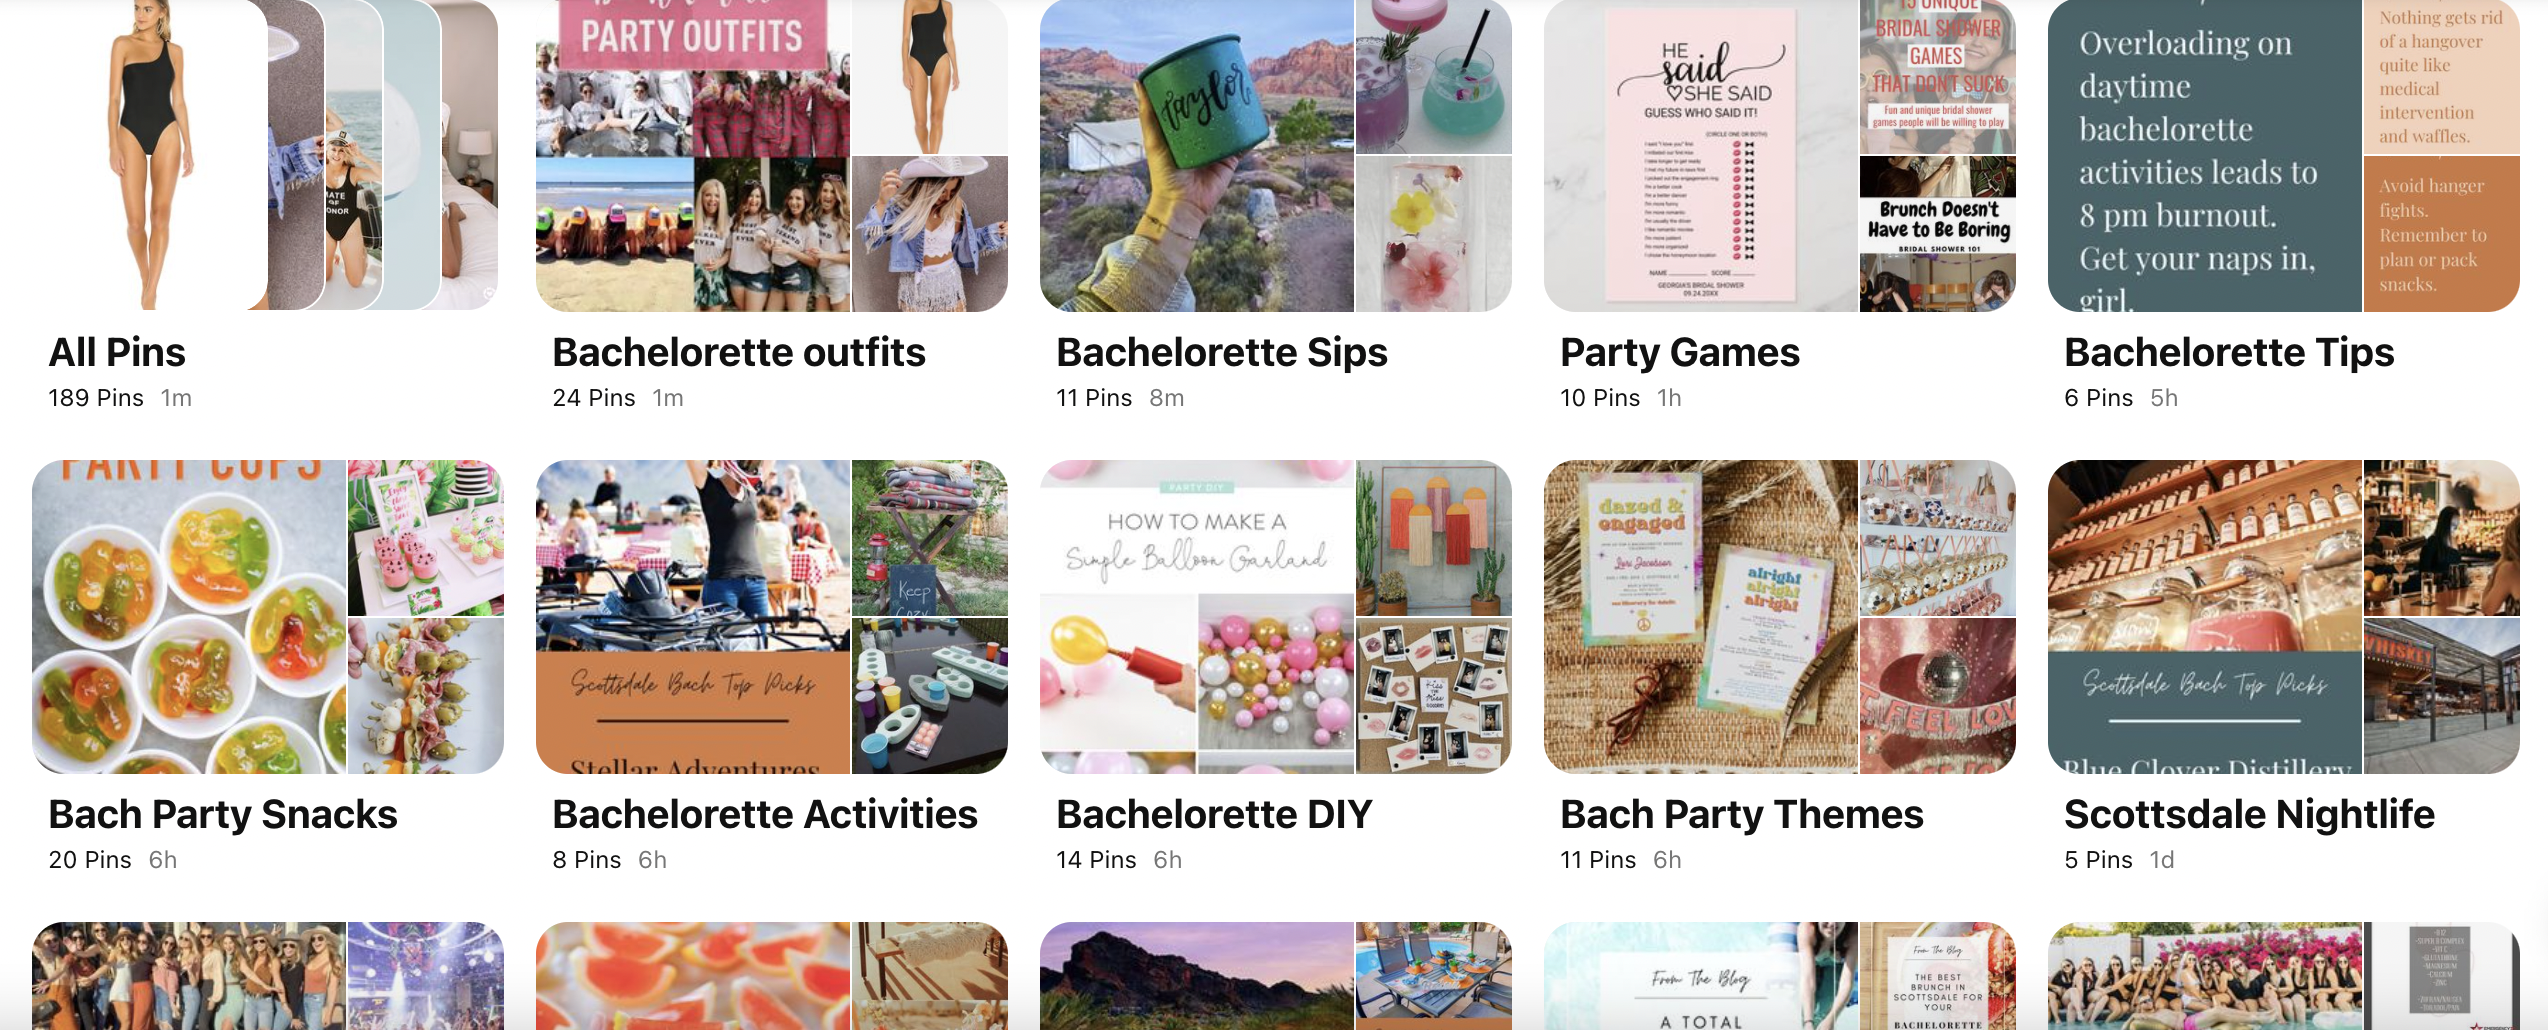 Bachelorette Party Ideas Pinterest: Scottsdale Bach